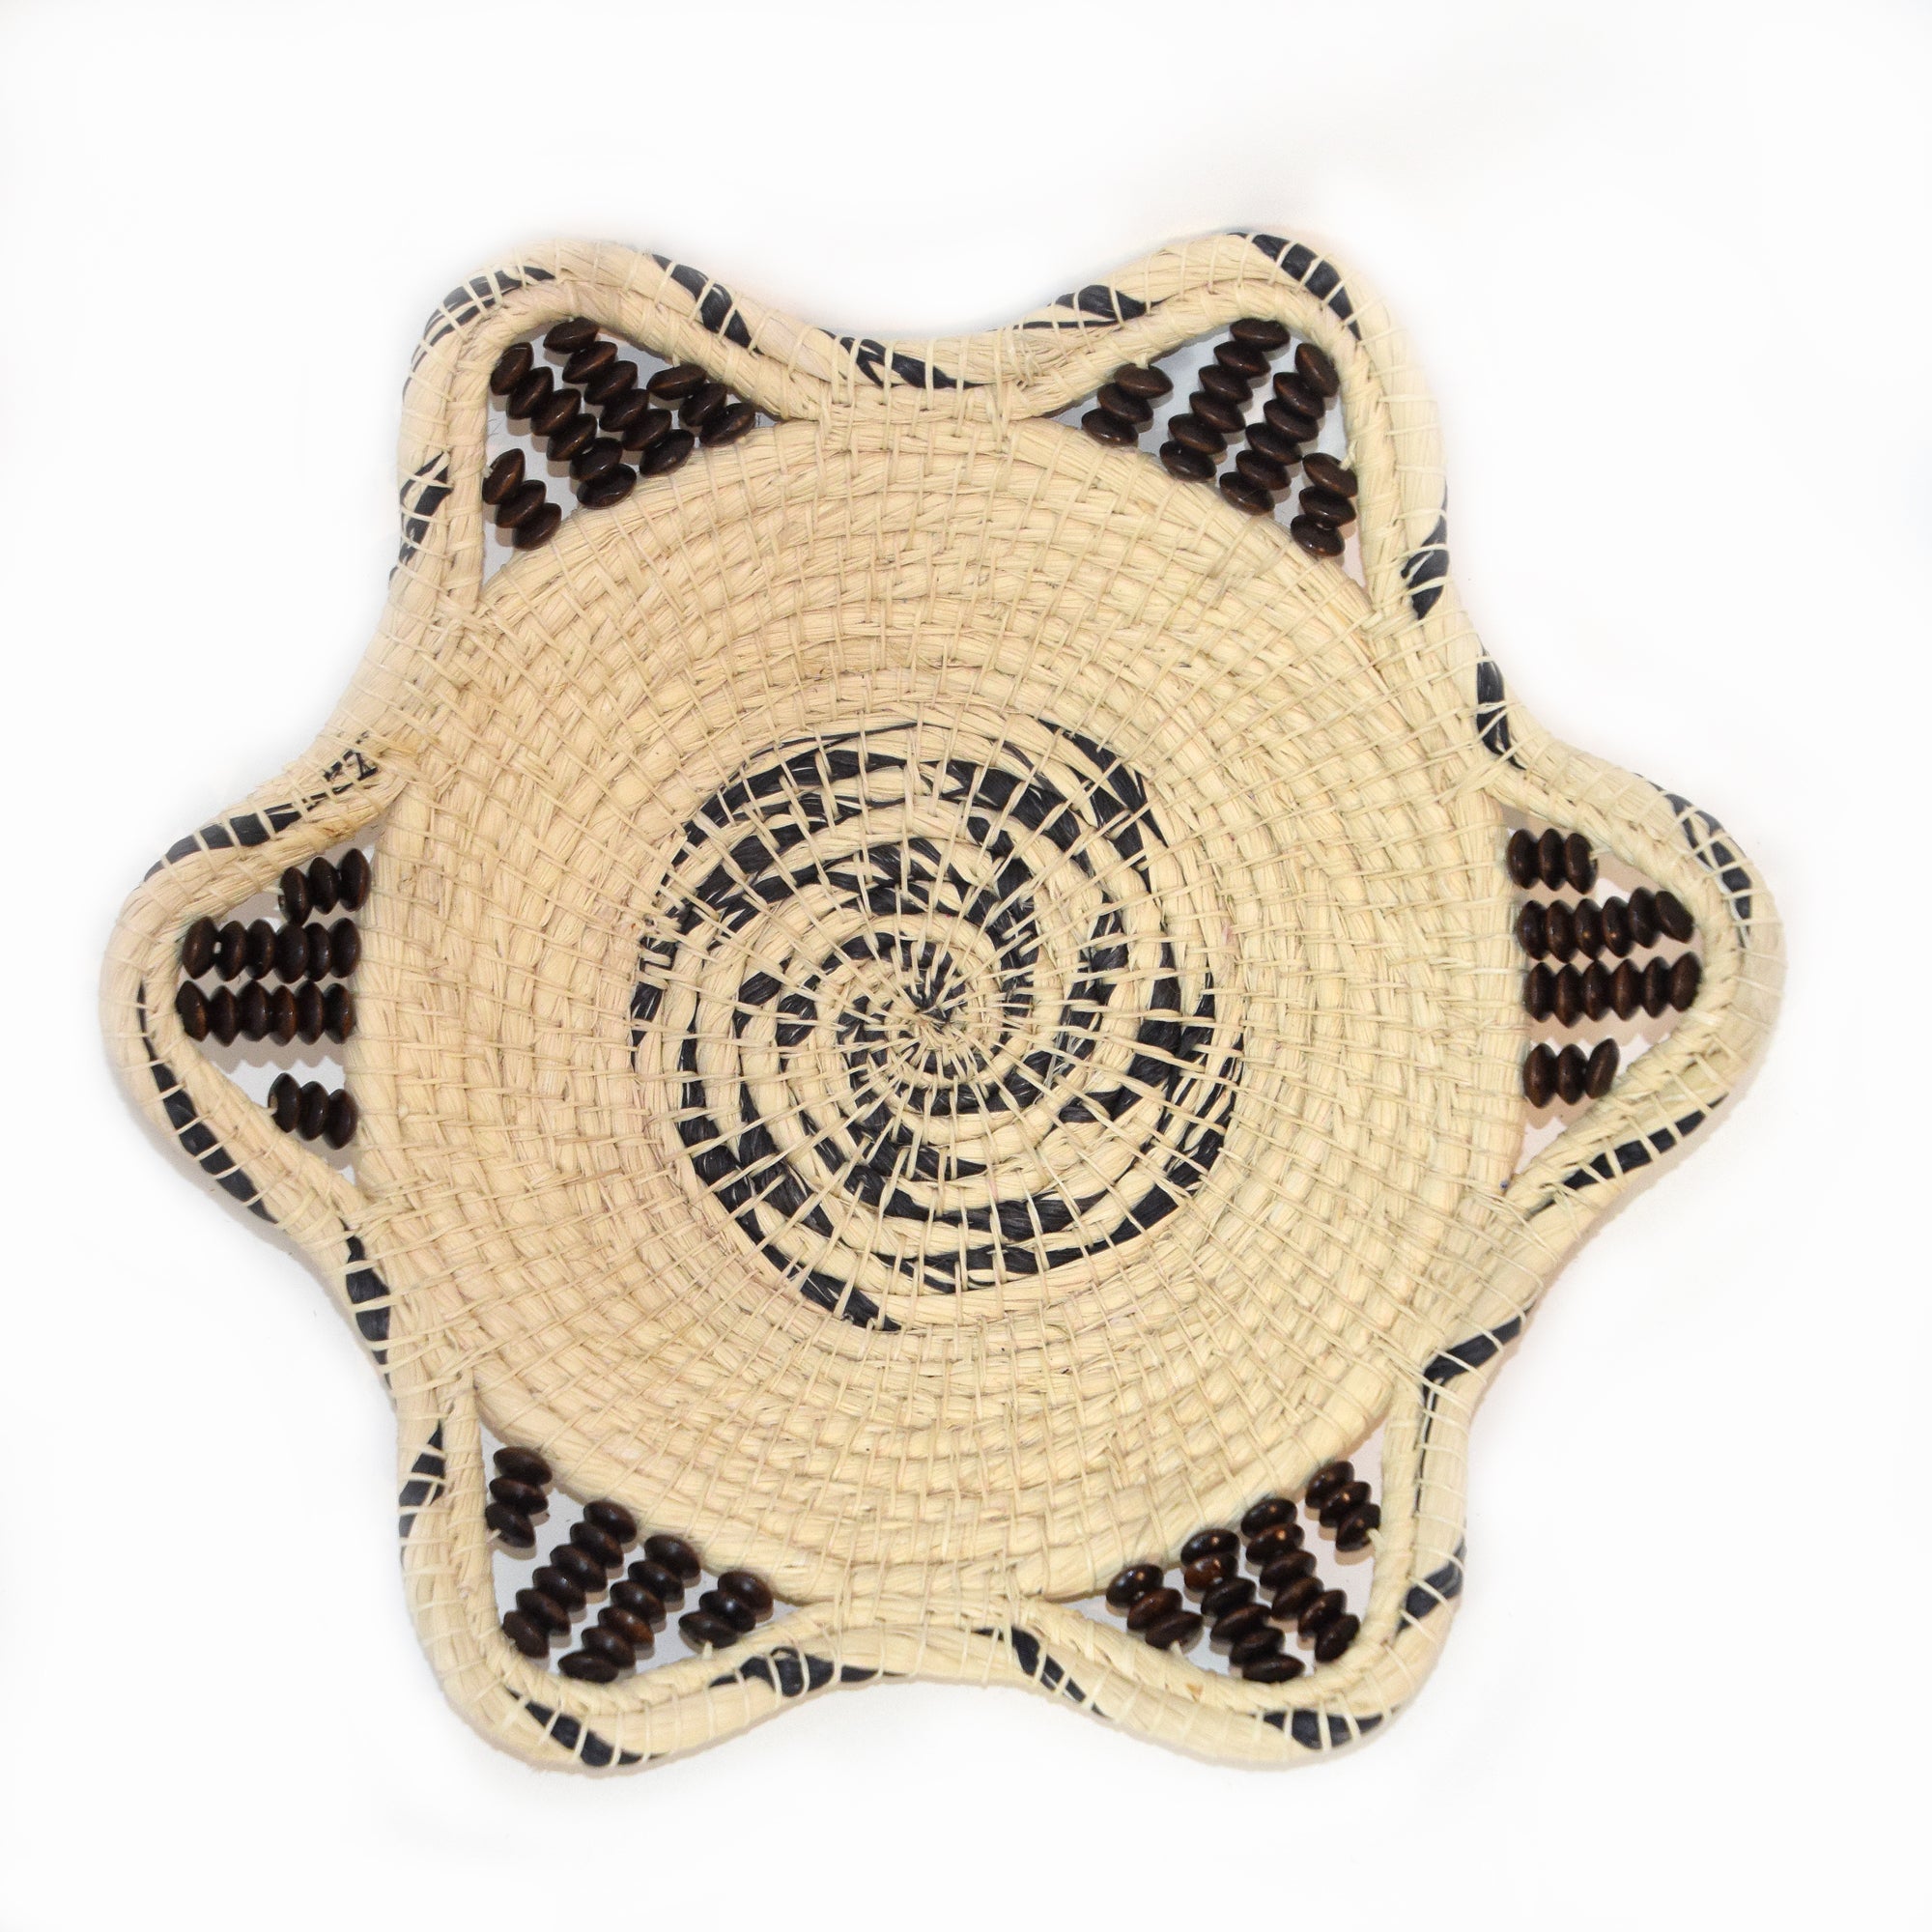 Cookies and Cream Handwoven Decorative Basket - Fair Trade